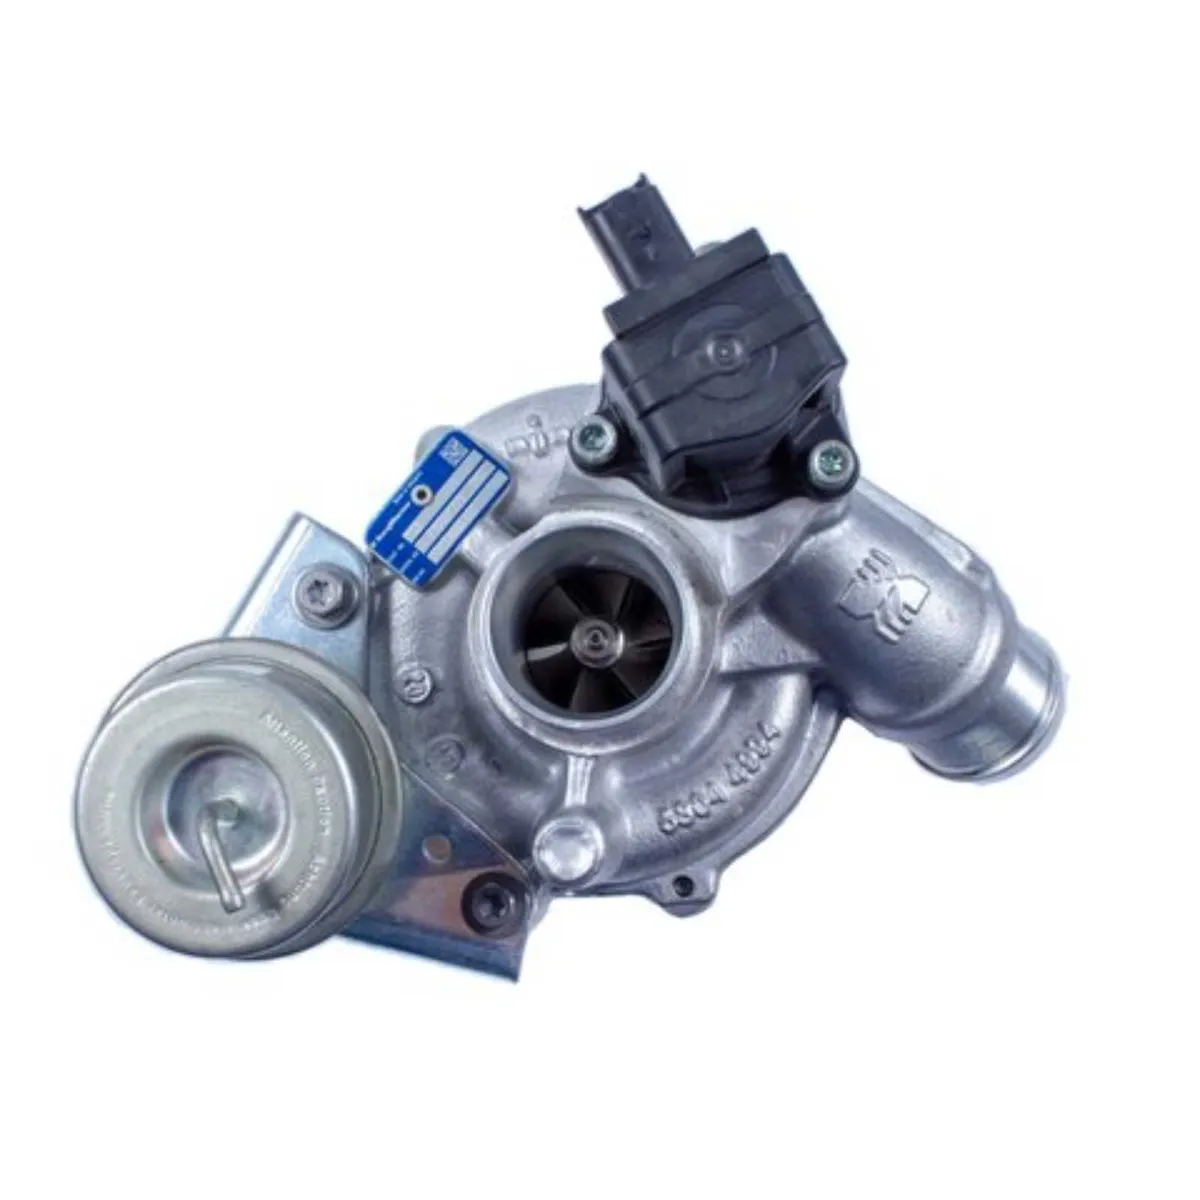 Peugeot Turbo - Turbo Parts - Image 1